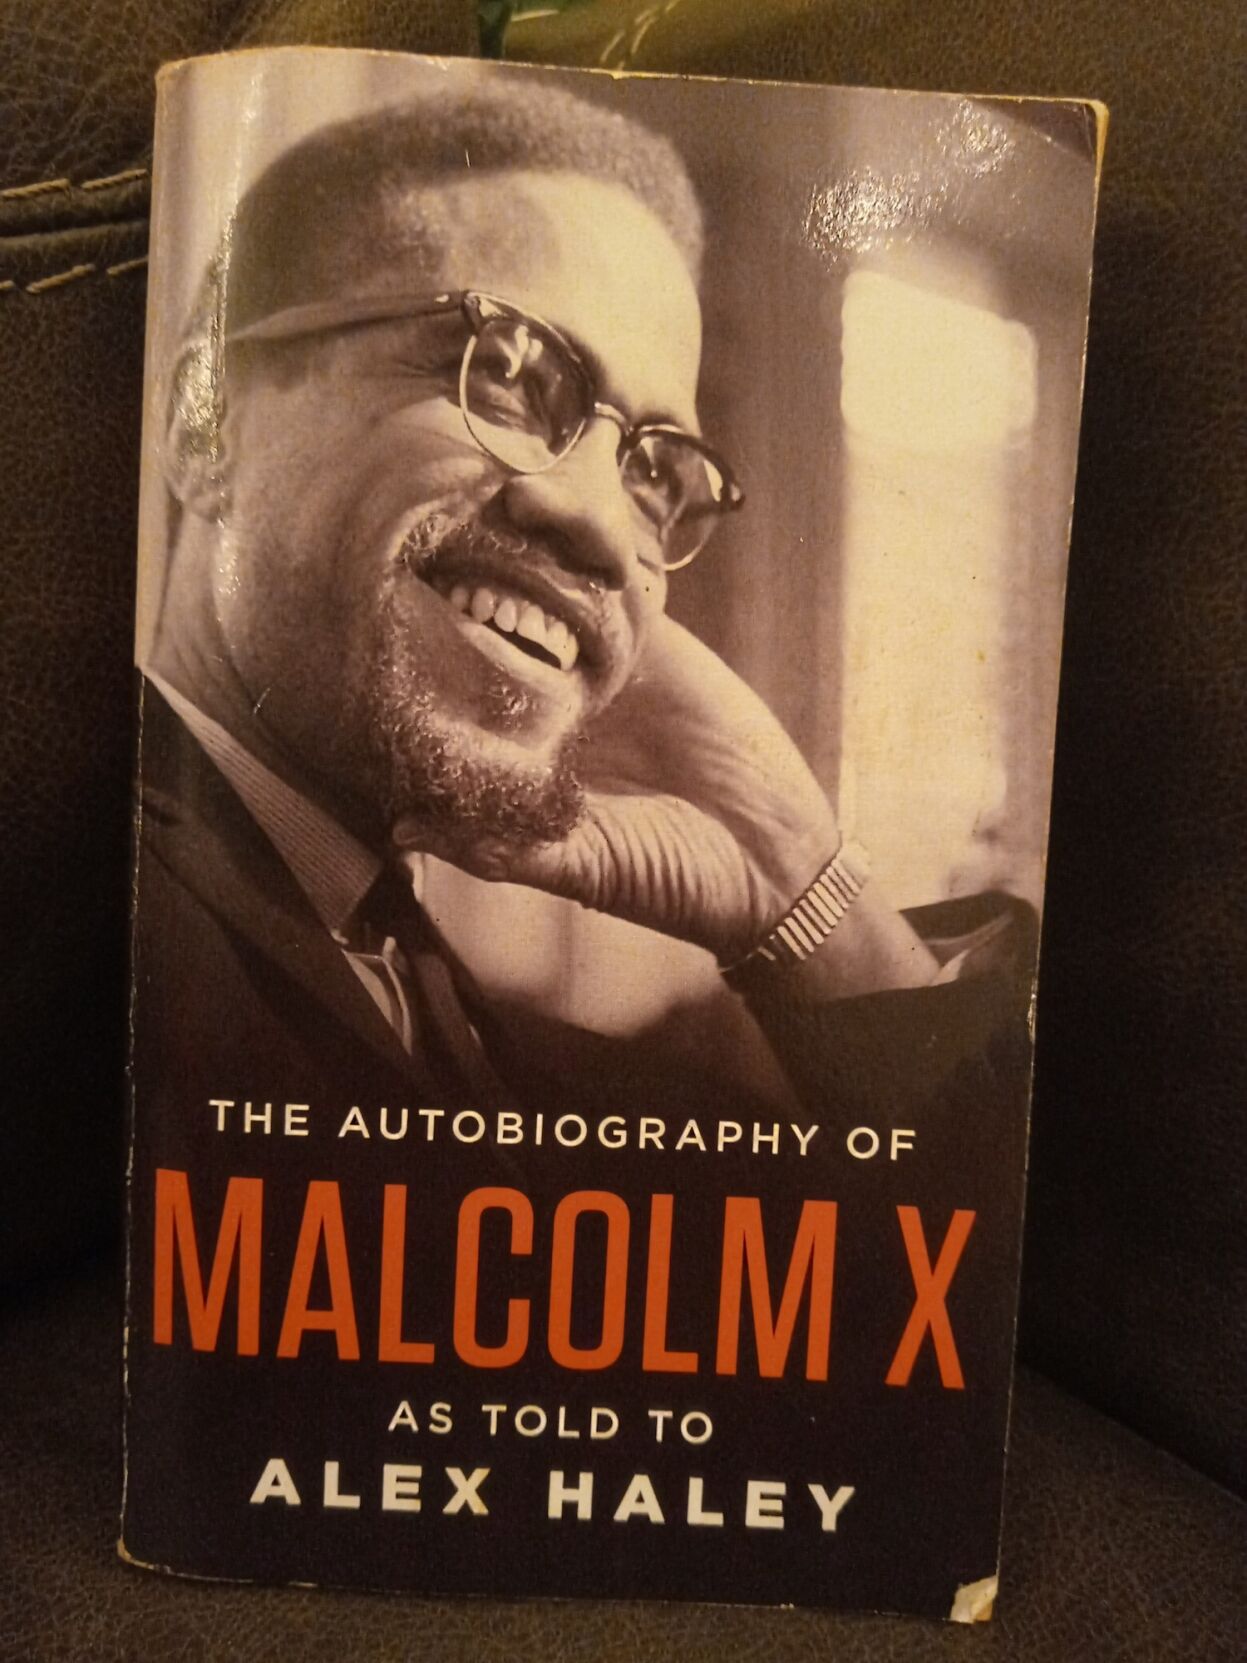 Malcom X, book